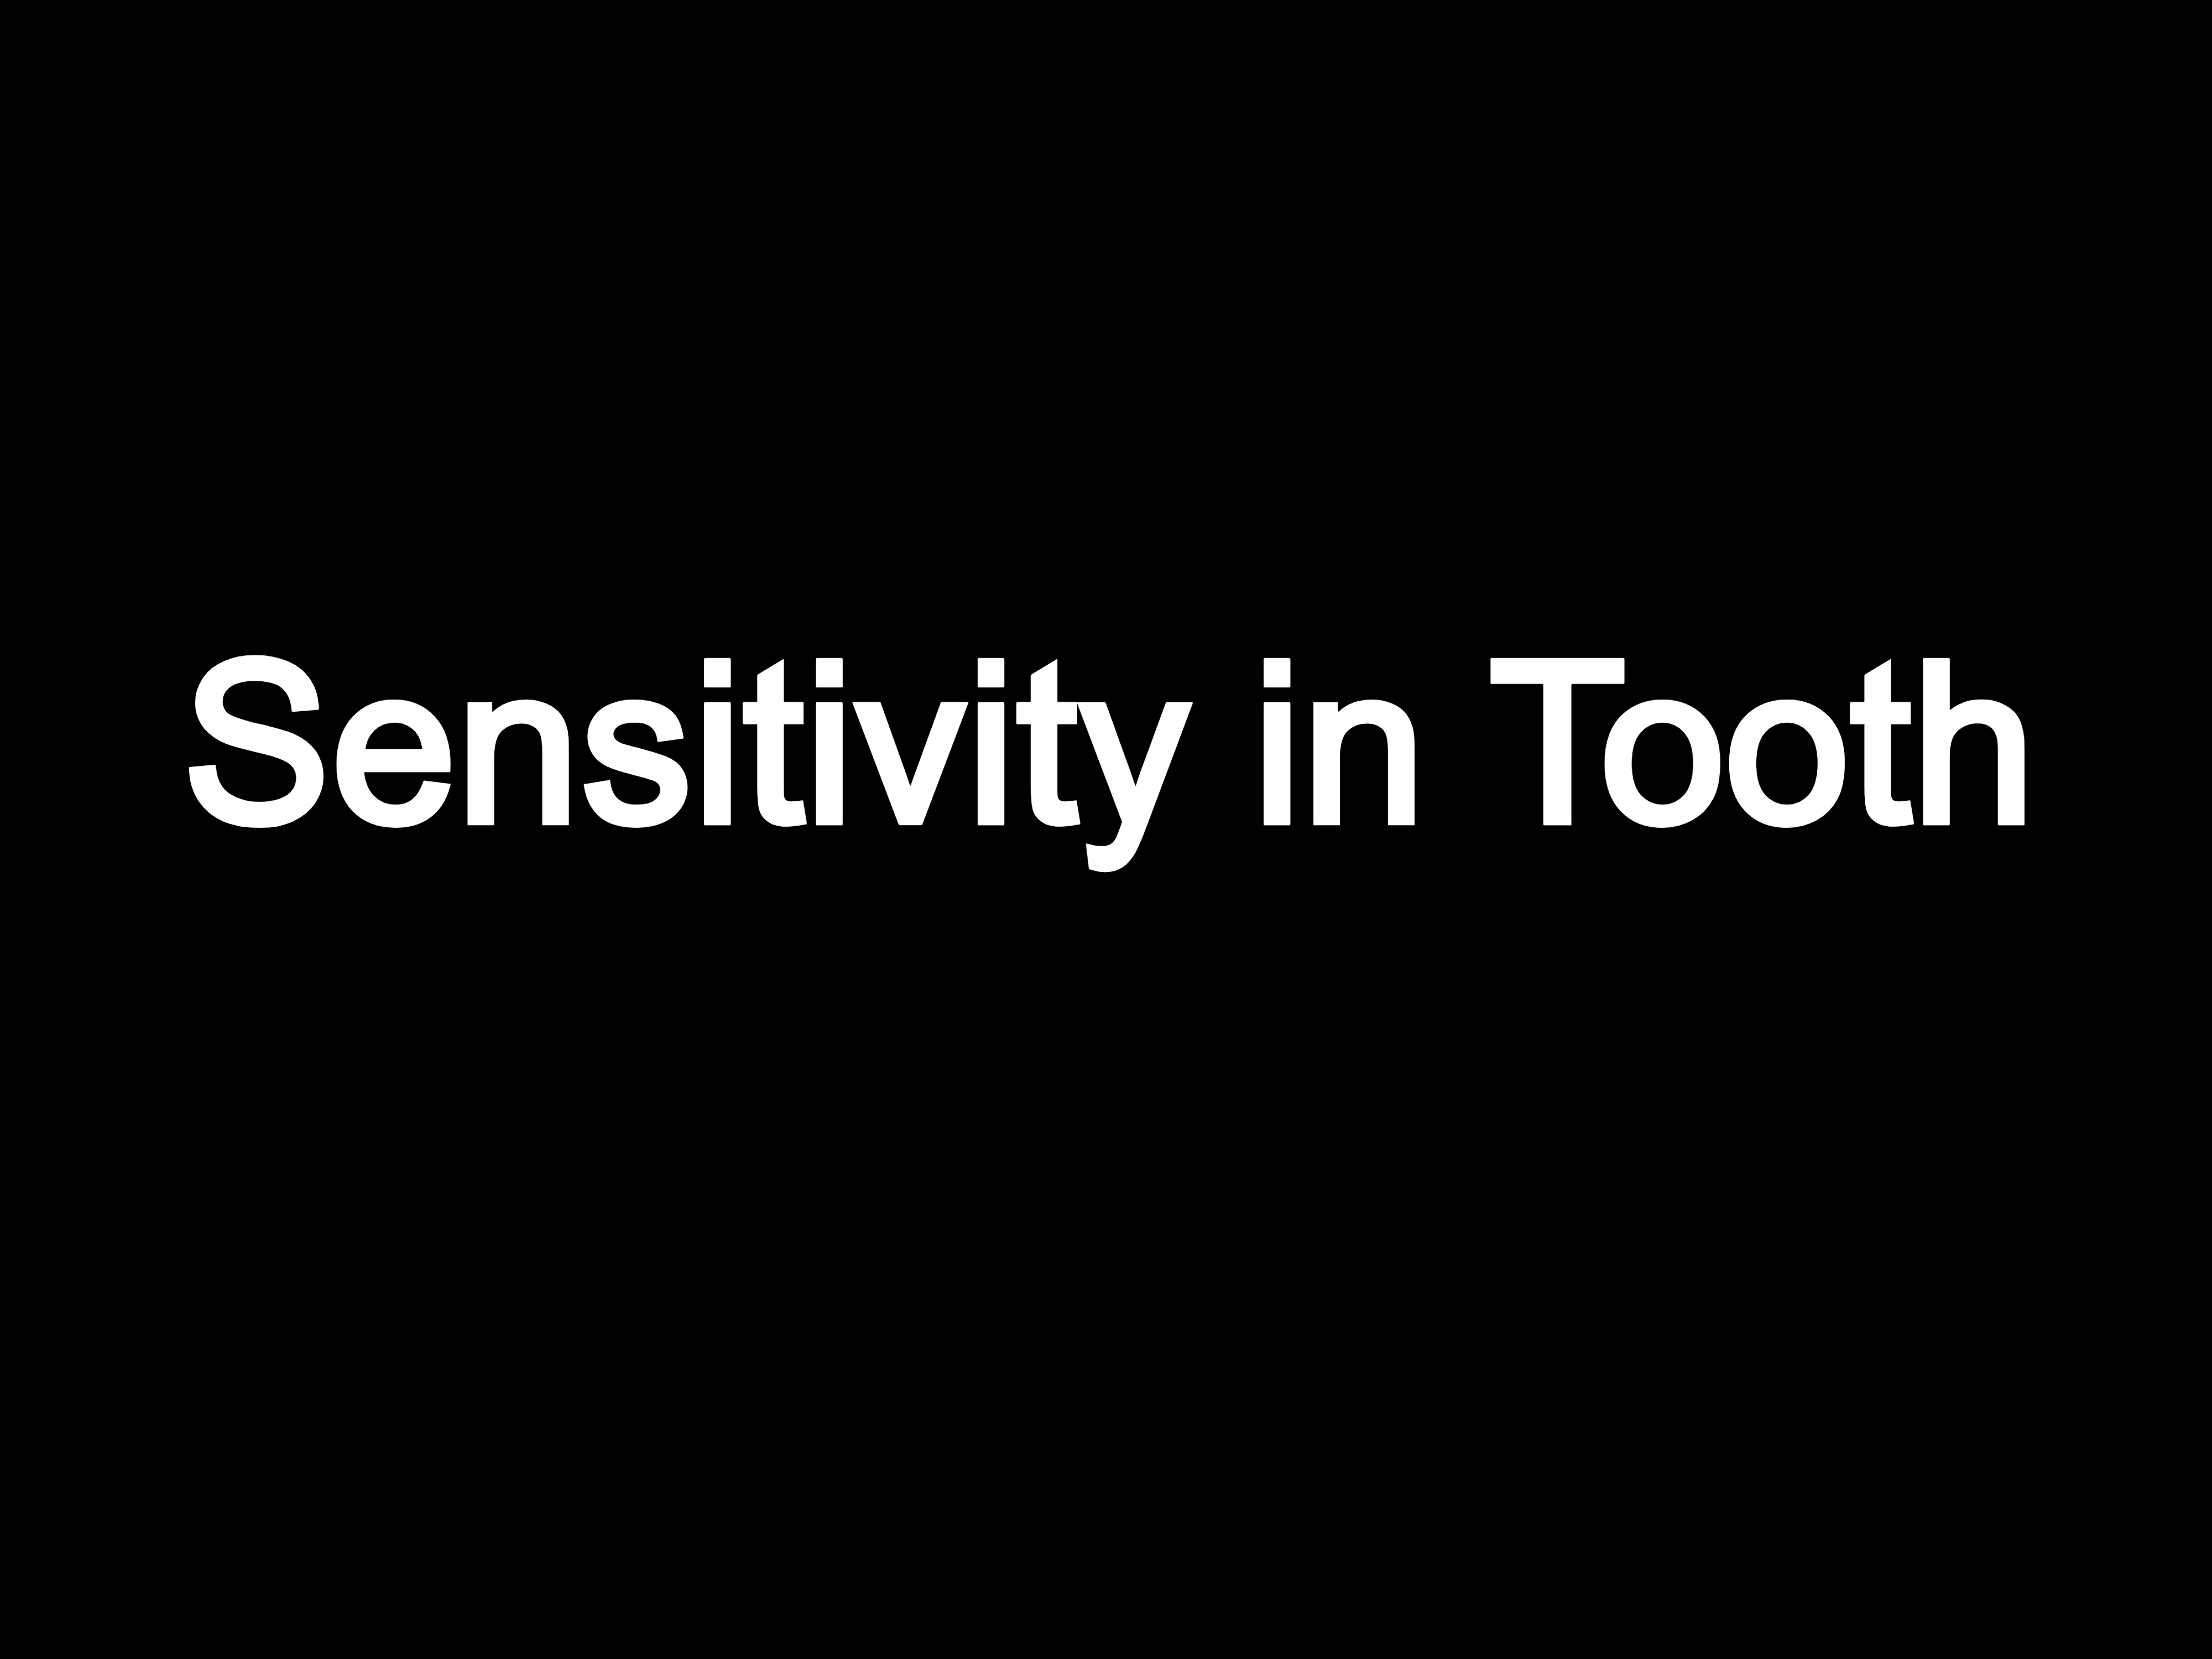 Sensitivity in teeth